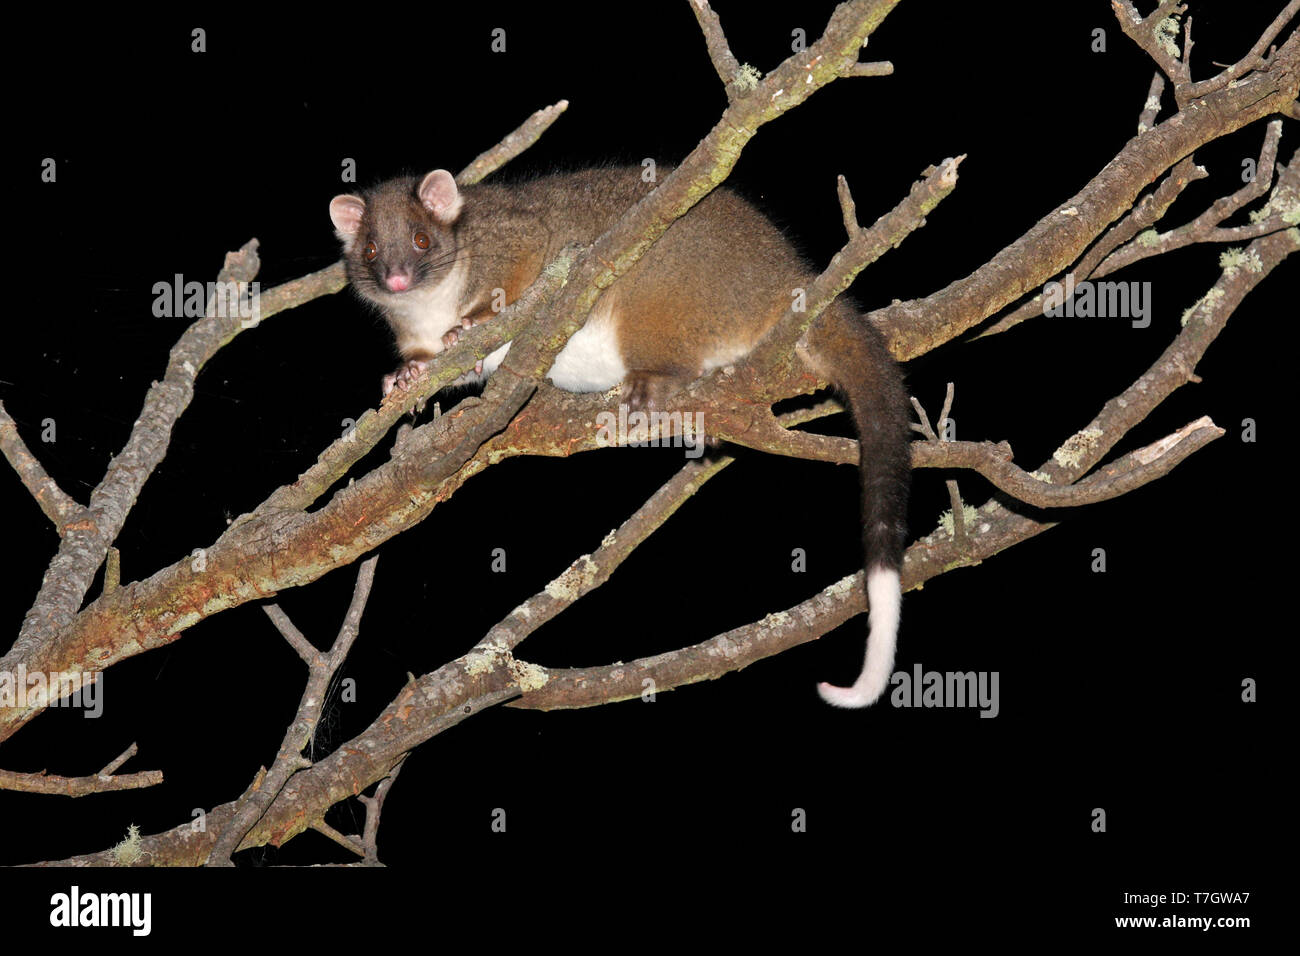 Common ringtail possum (Pseudocheirus peregrinus) in a tree at night Stock Photo